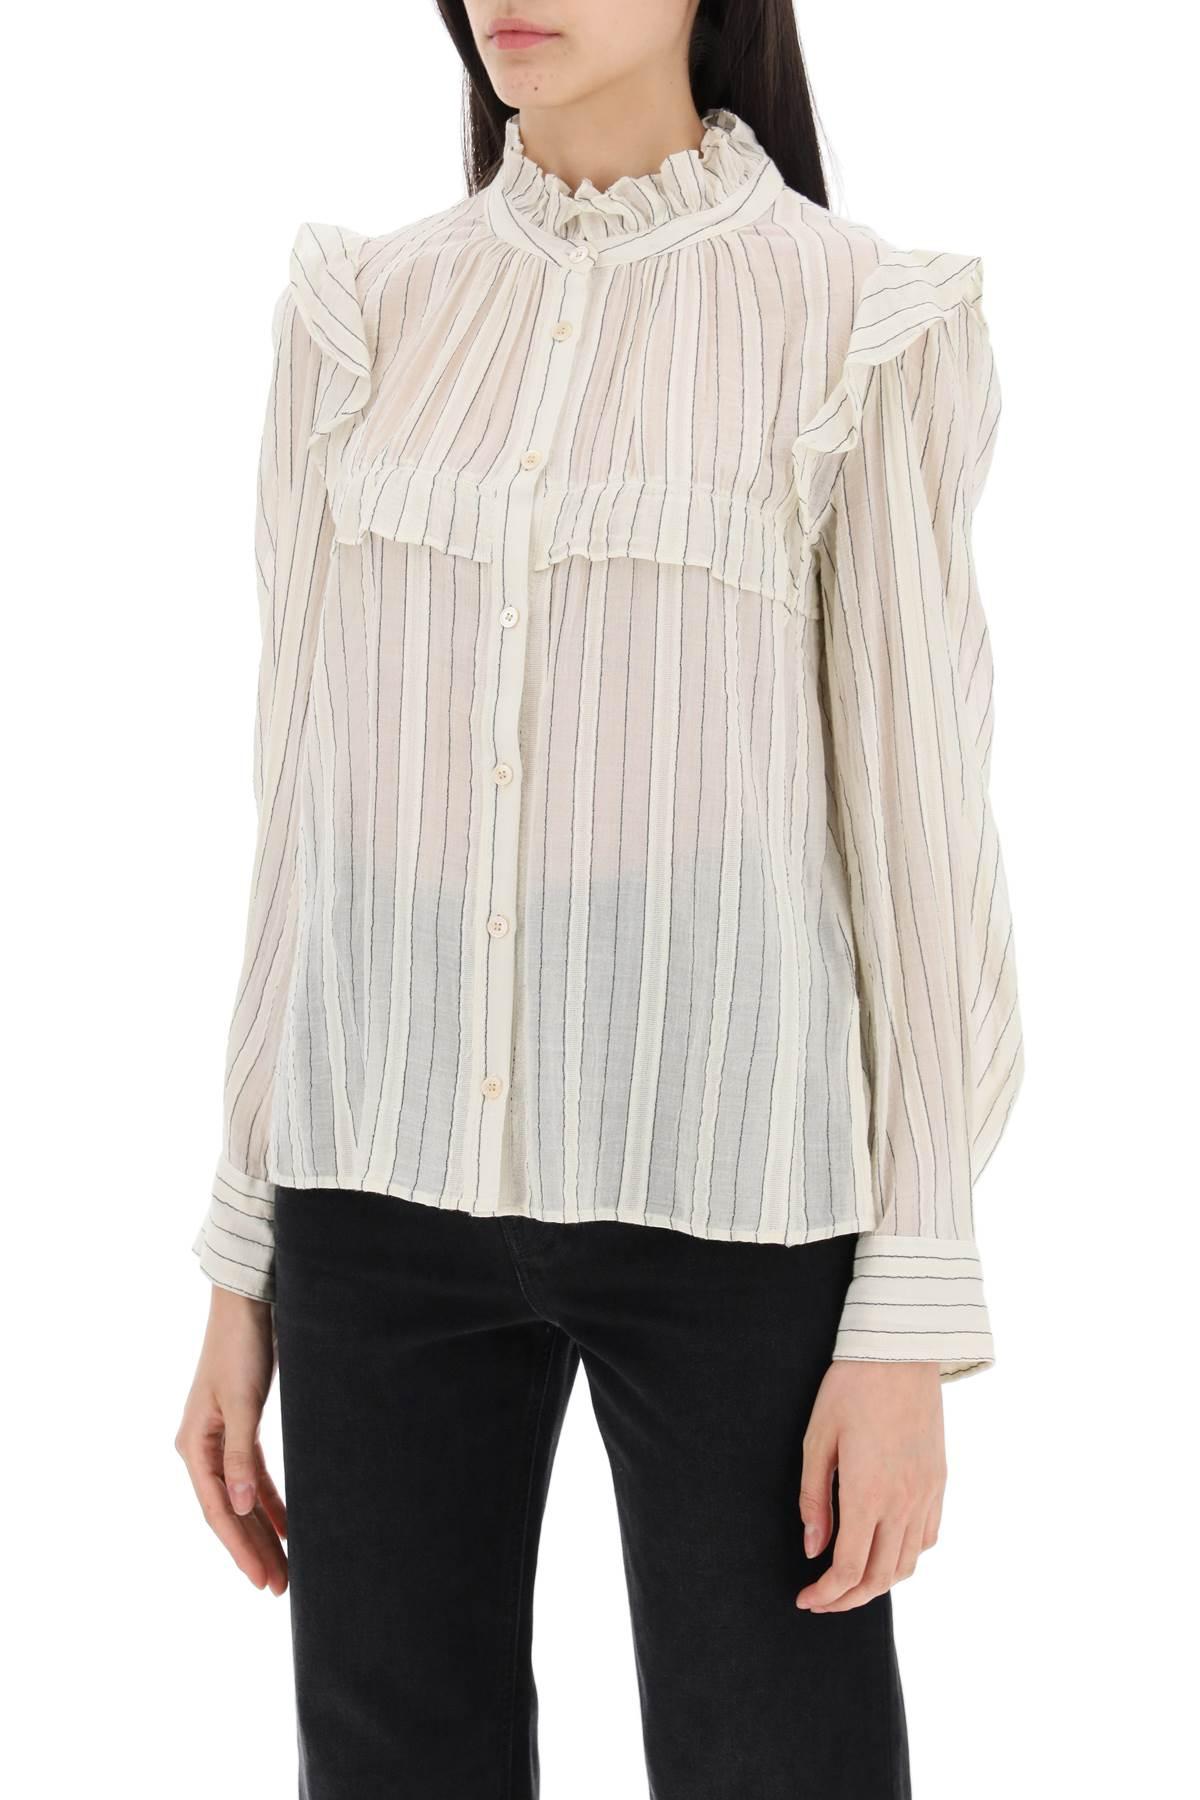 Marant Étoile MARANT ETOILE "Striped cotton blouse by Id